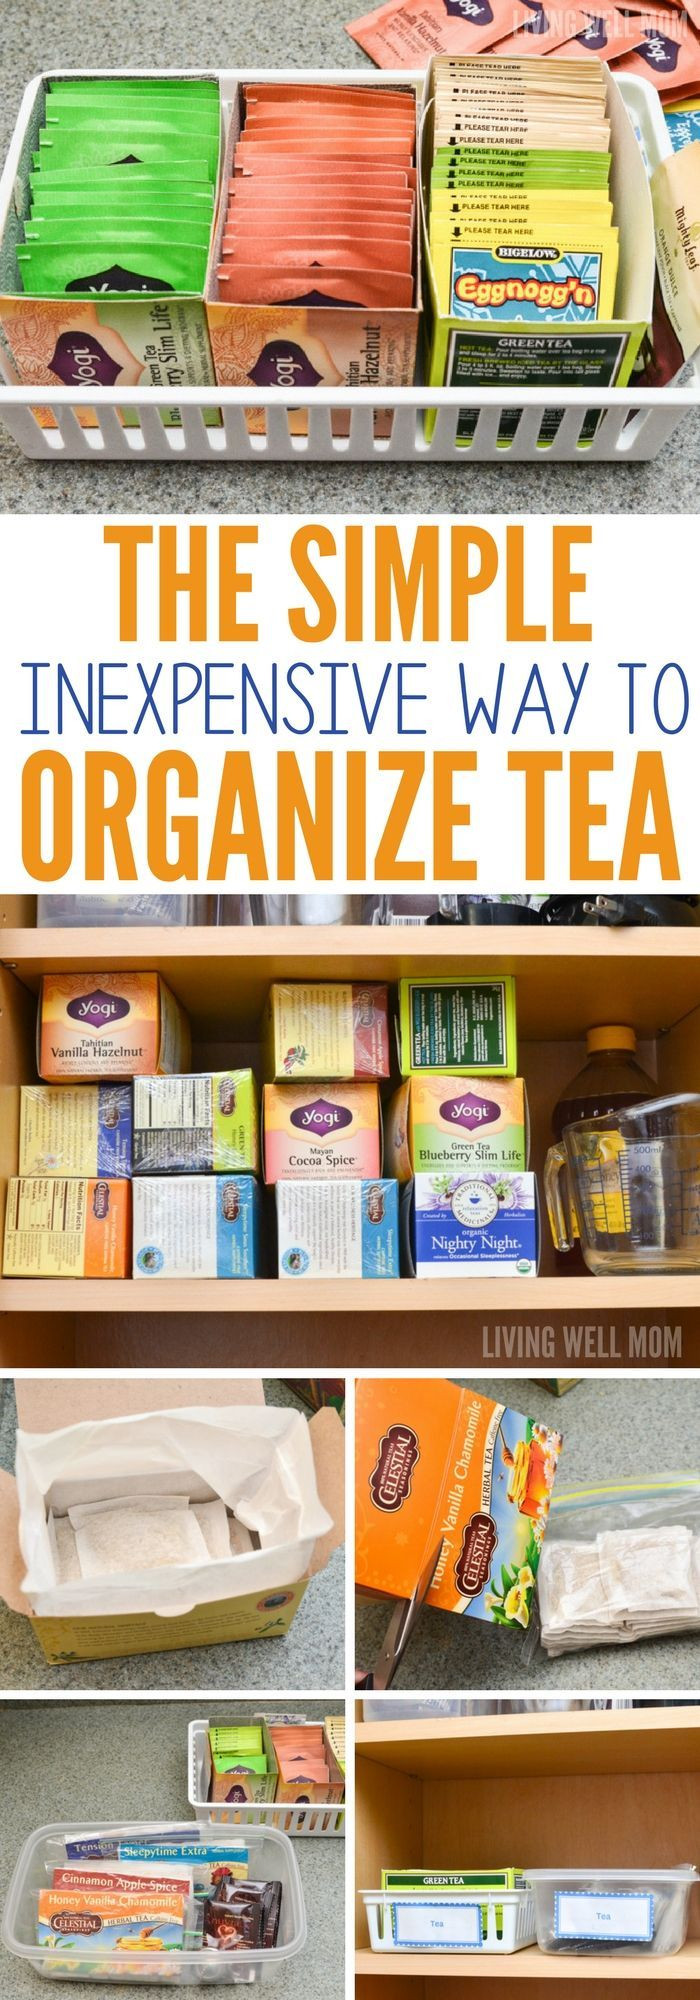 Best ideas about Tea Organizer DIY
. Save or Pin Best 20 Tea bag storage ideas on Pinterest Now.